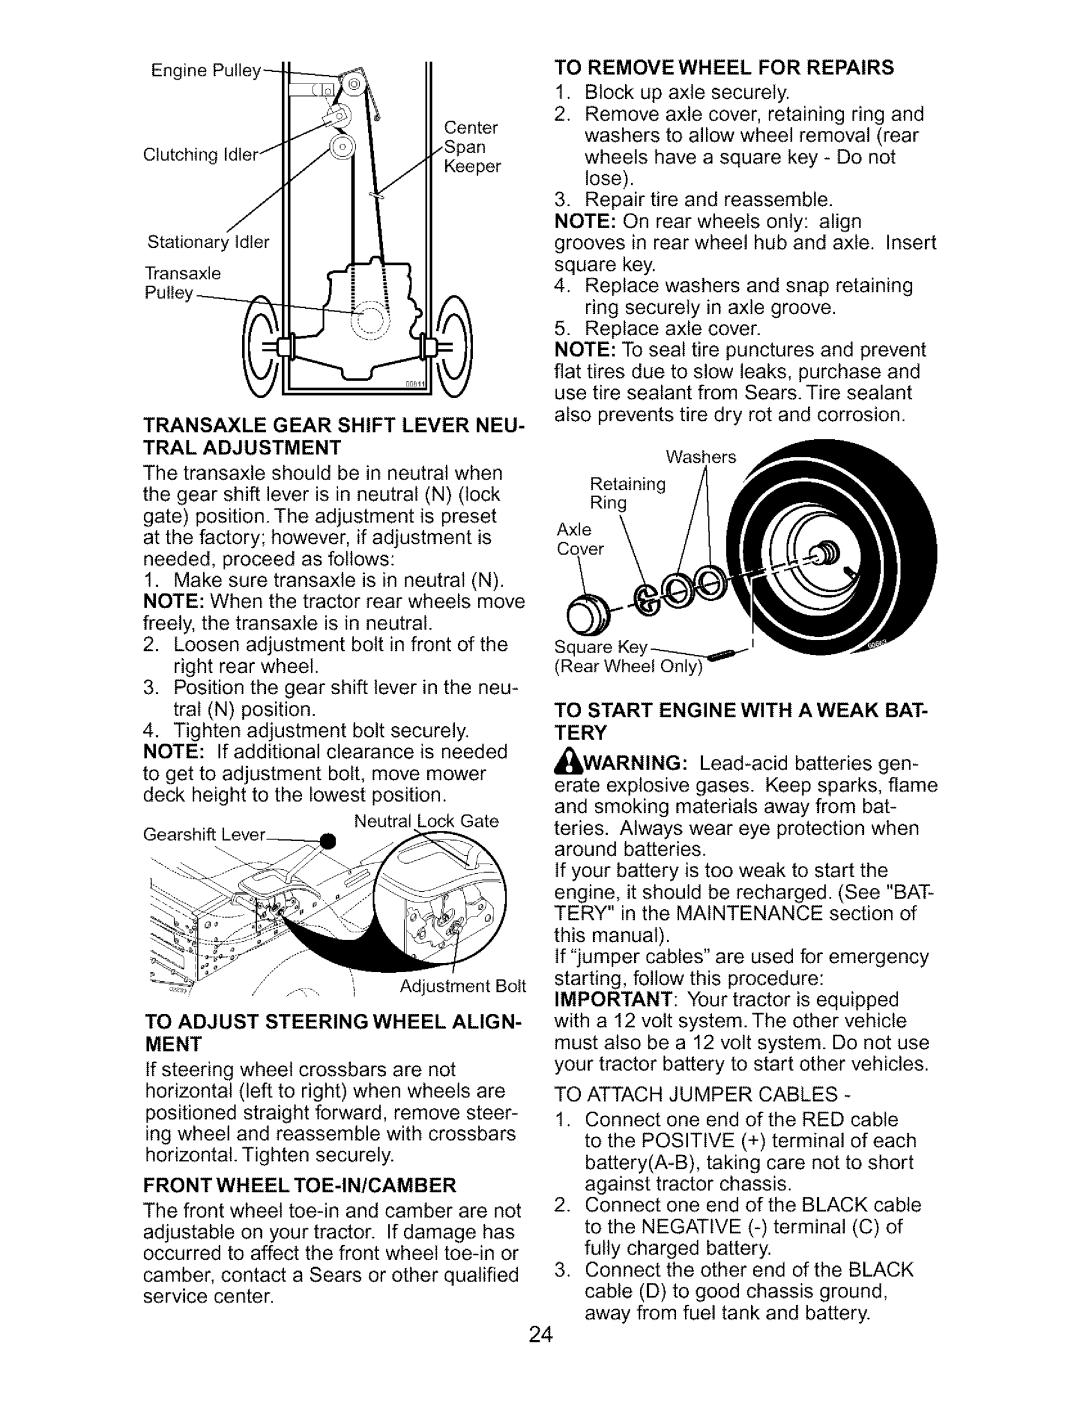 Craftsman 917.27317 owner manual To Removewheel For Repairs, To Start Engine With Aweak Bat, Tery, _Warning 